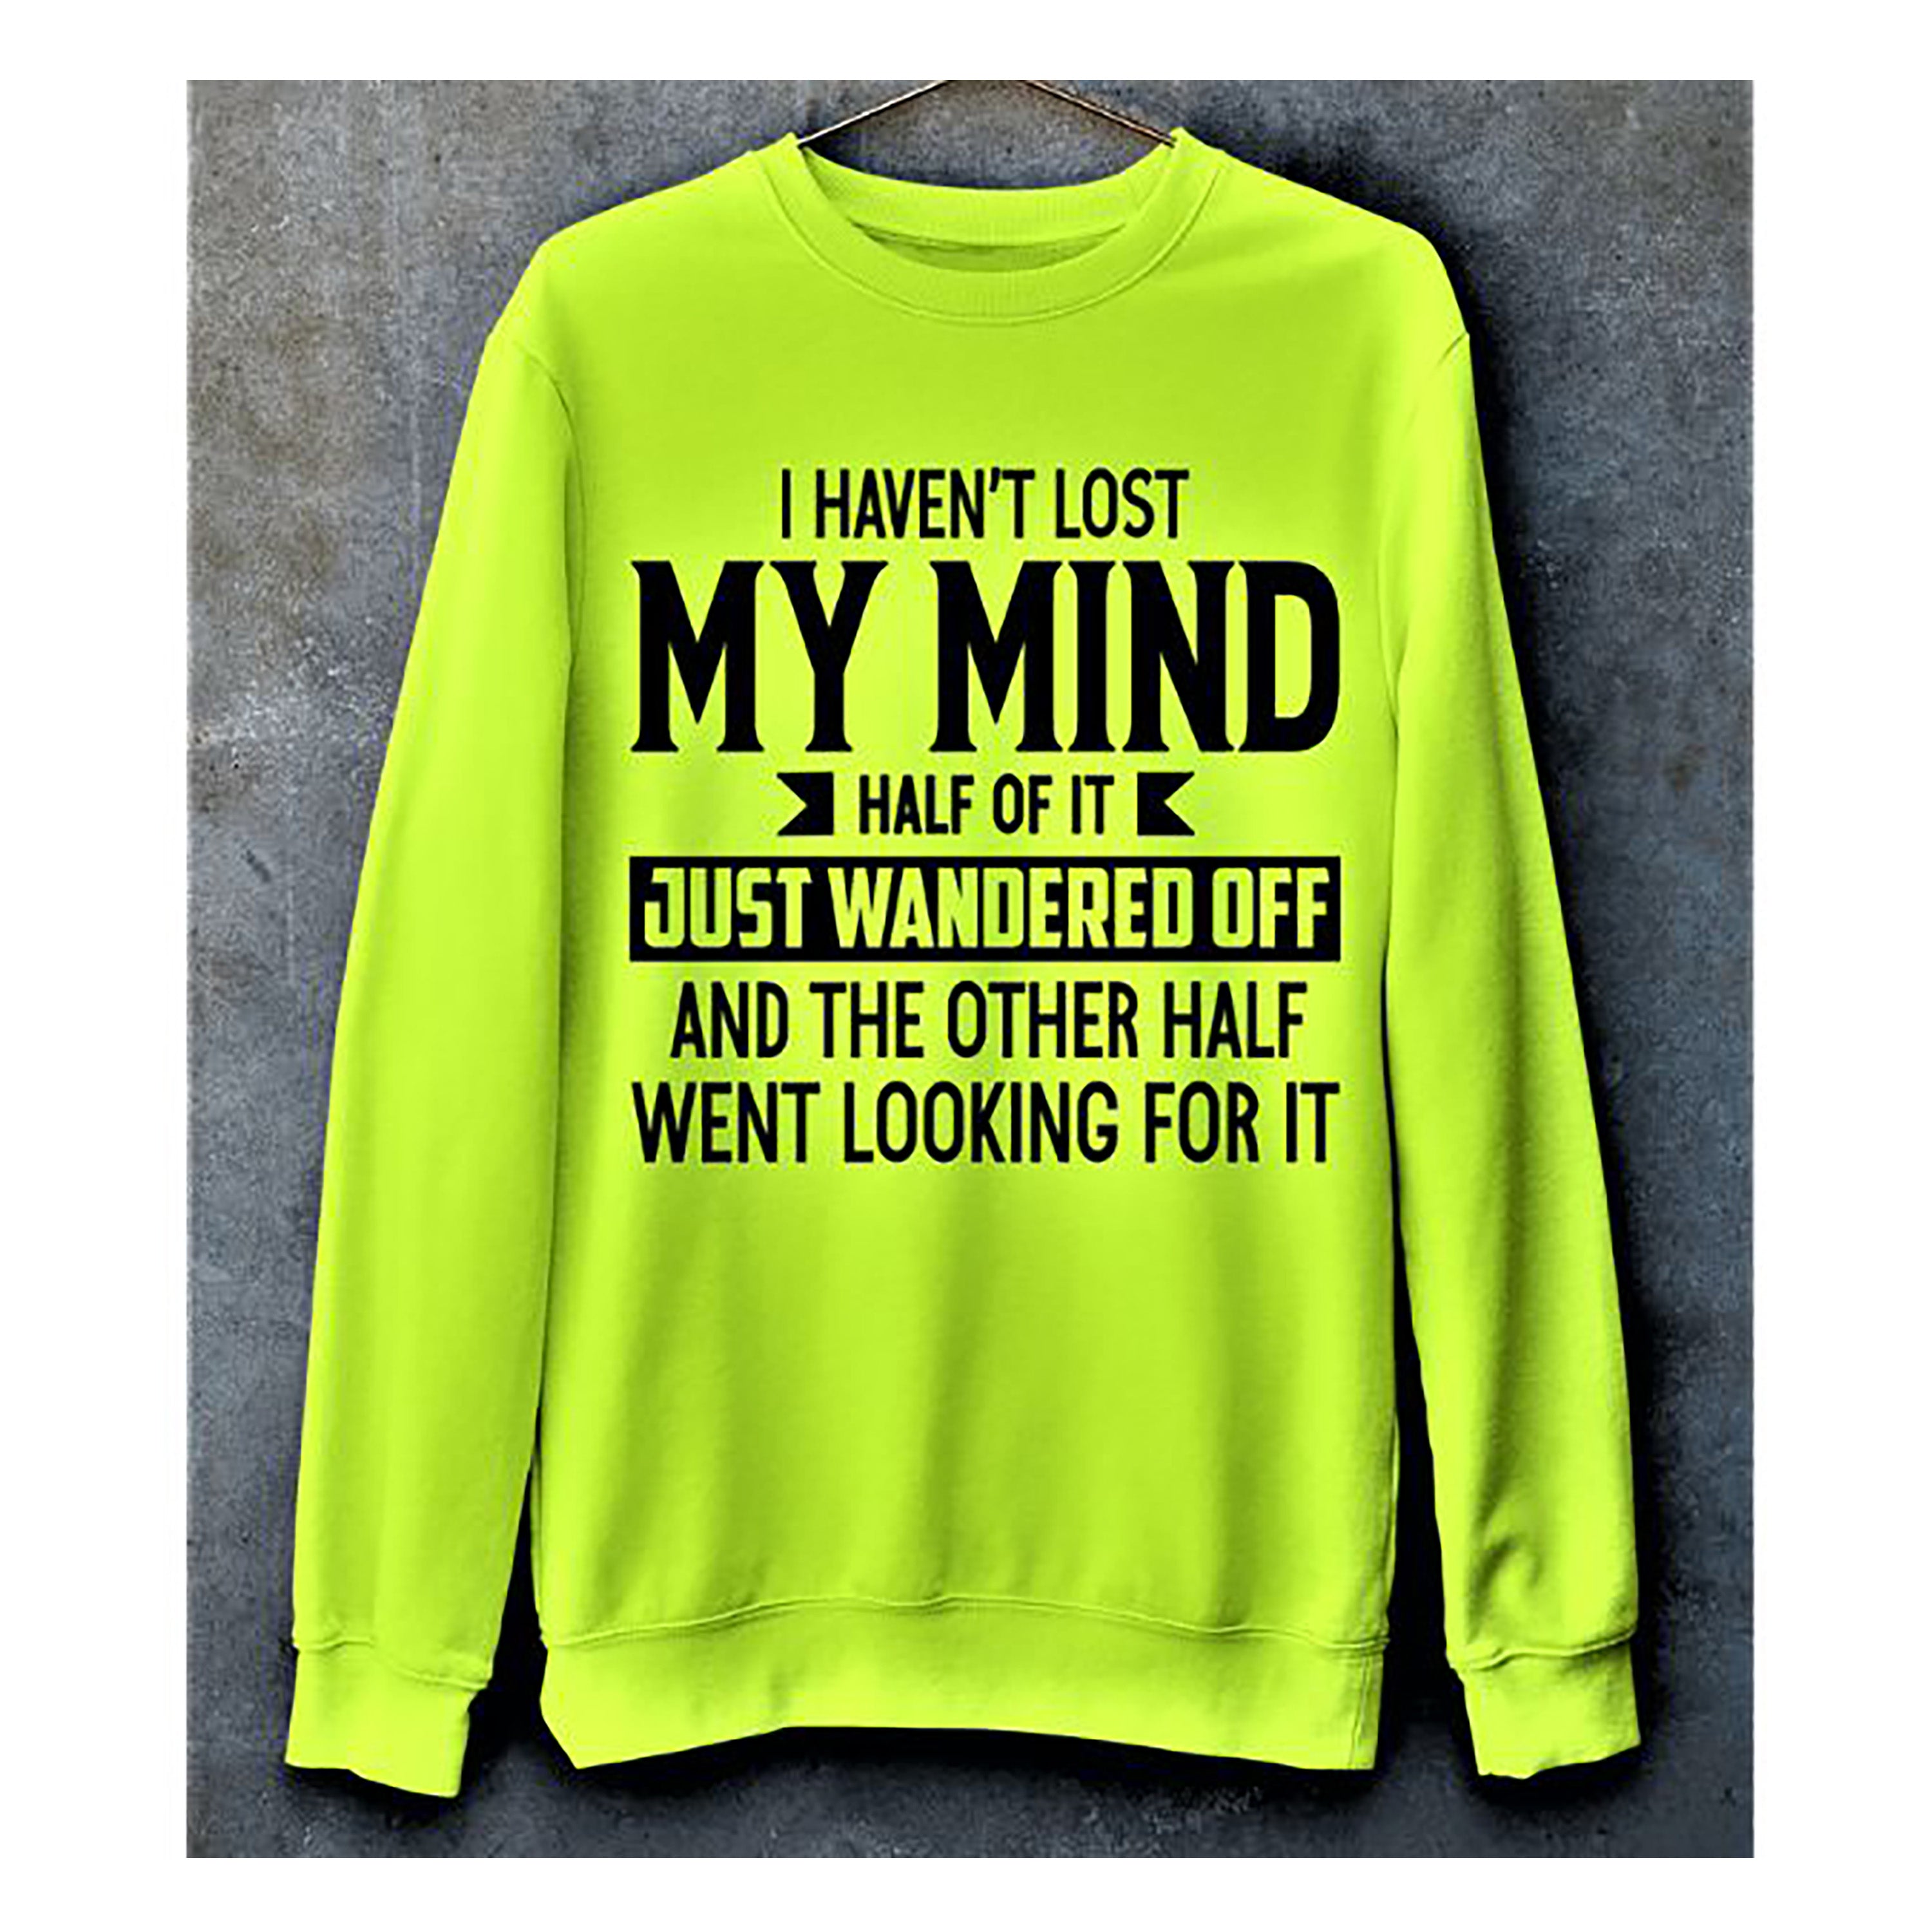 "I HAVEN'T LOST MY MIND"- Hoodie & Sweatshirt.